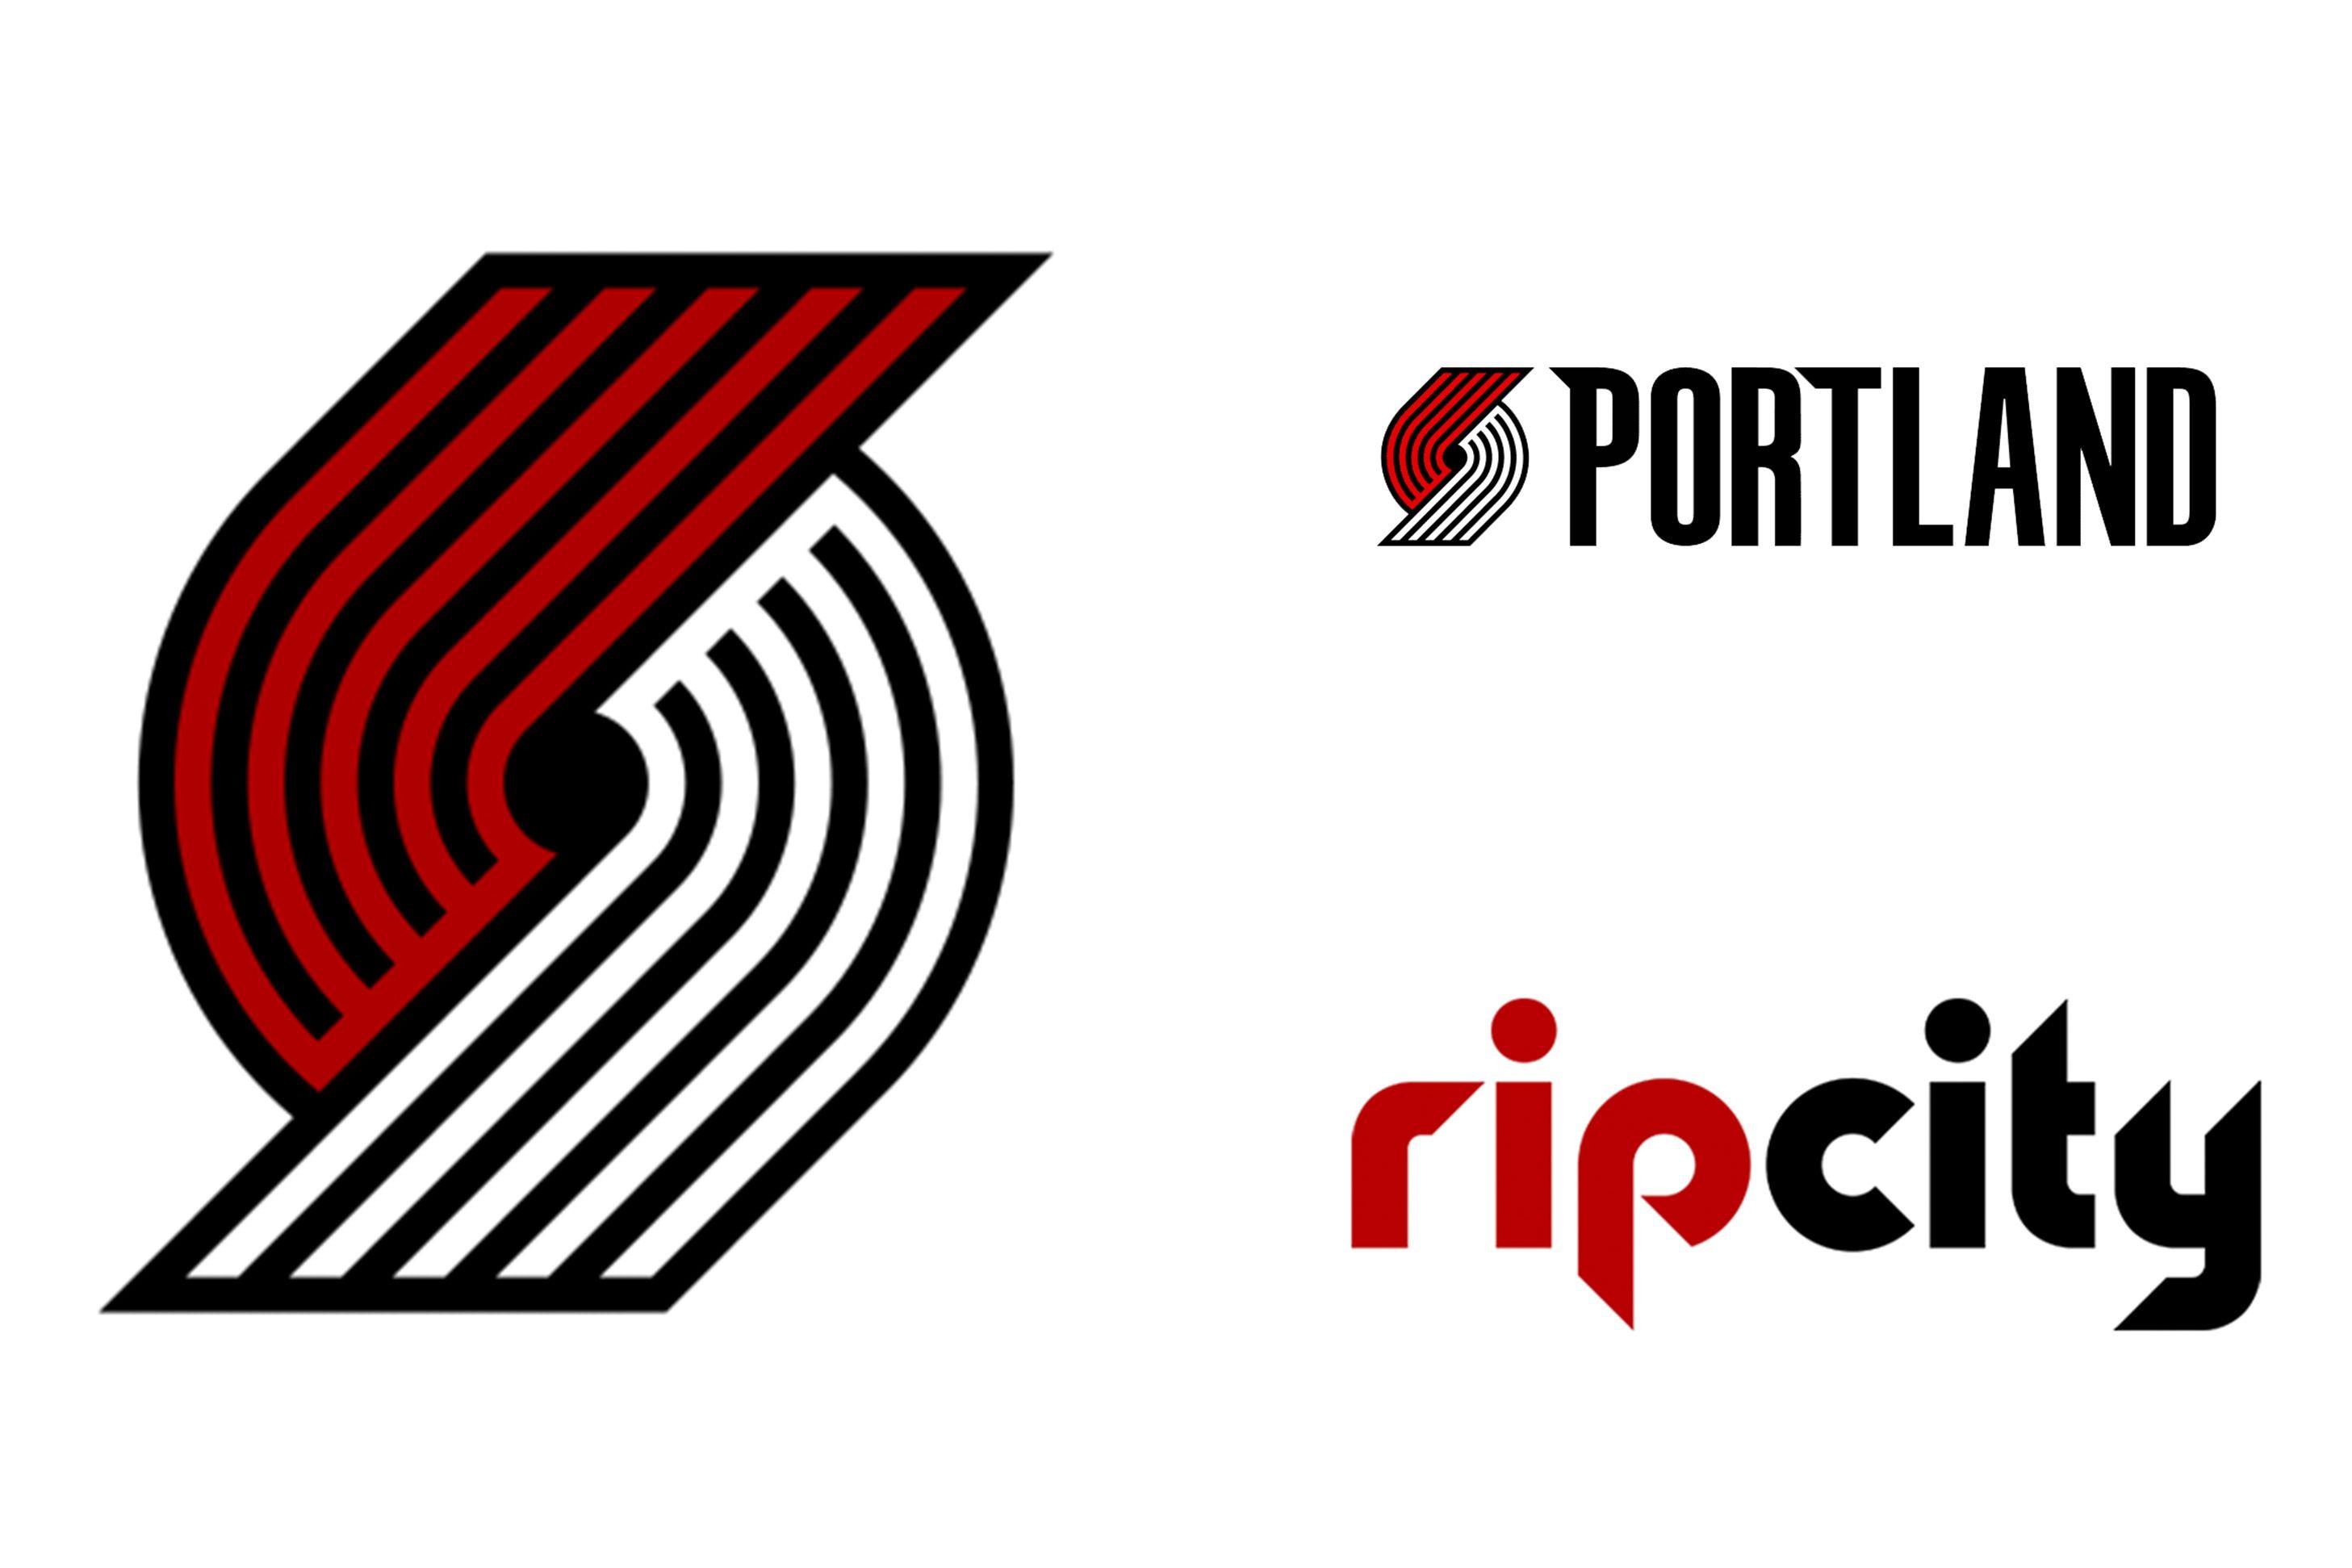 Portland Logo - Trail Blazers unveil new logo for 2017 season | NBC Sports Northwest